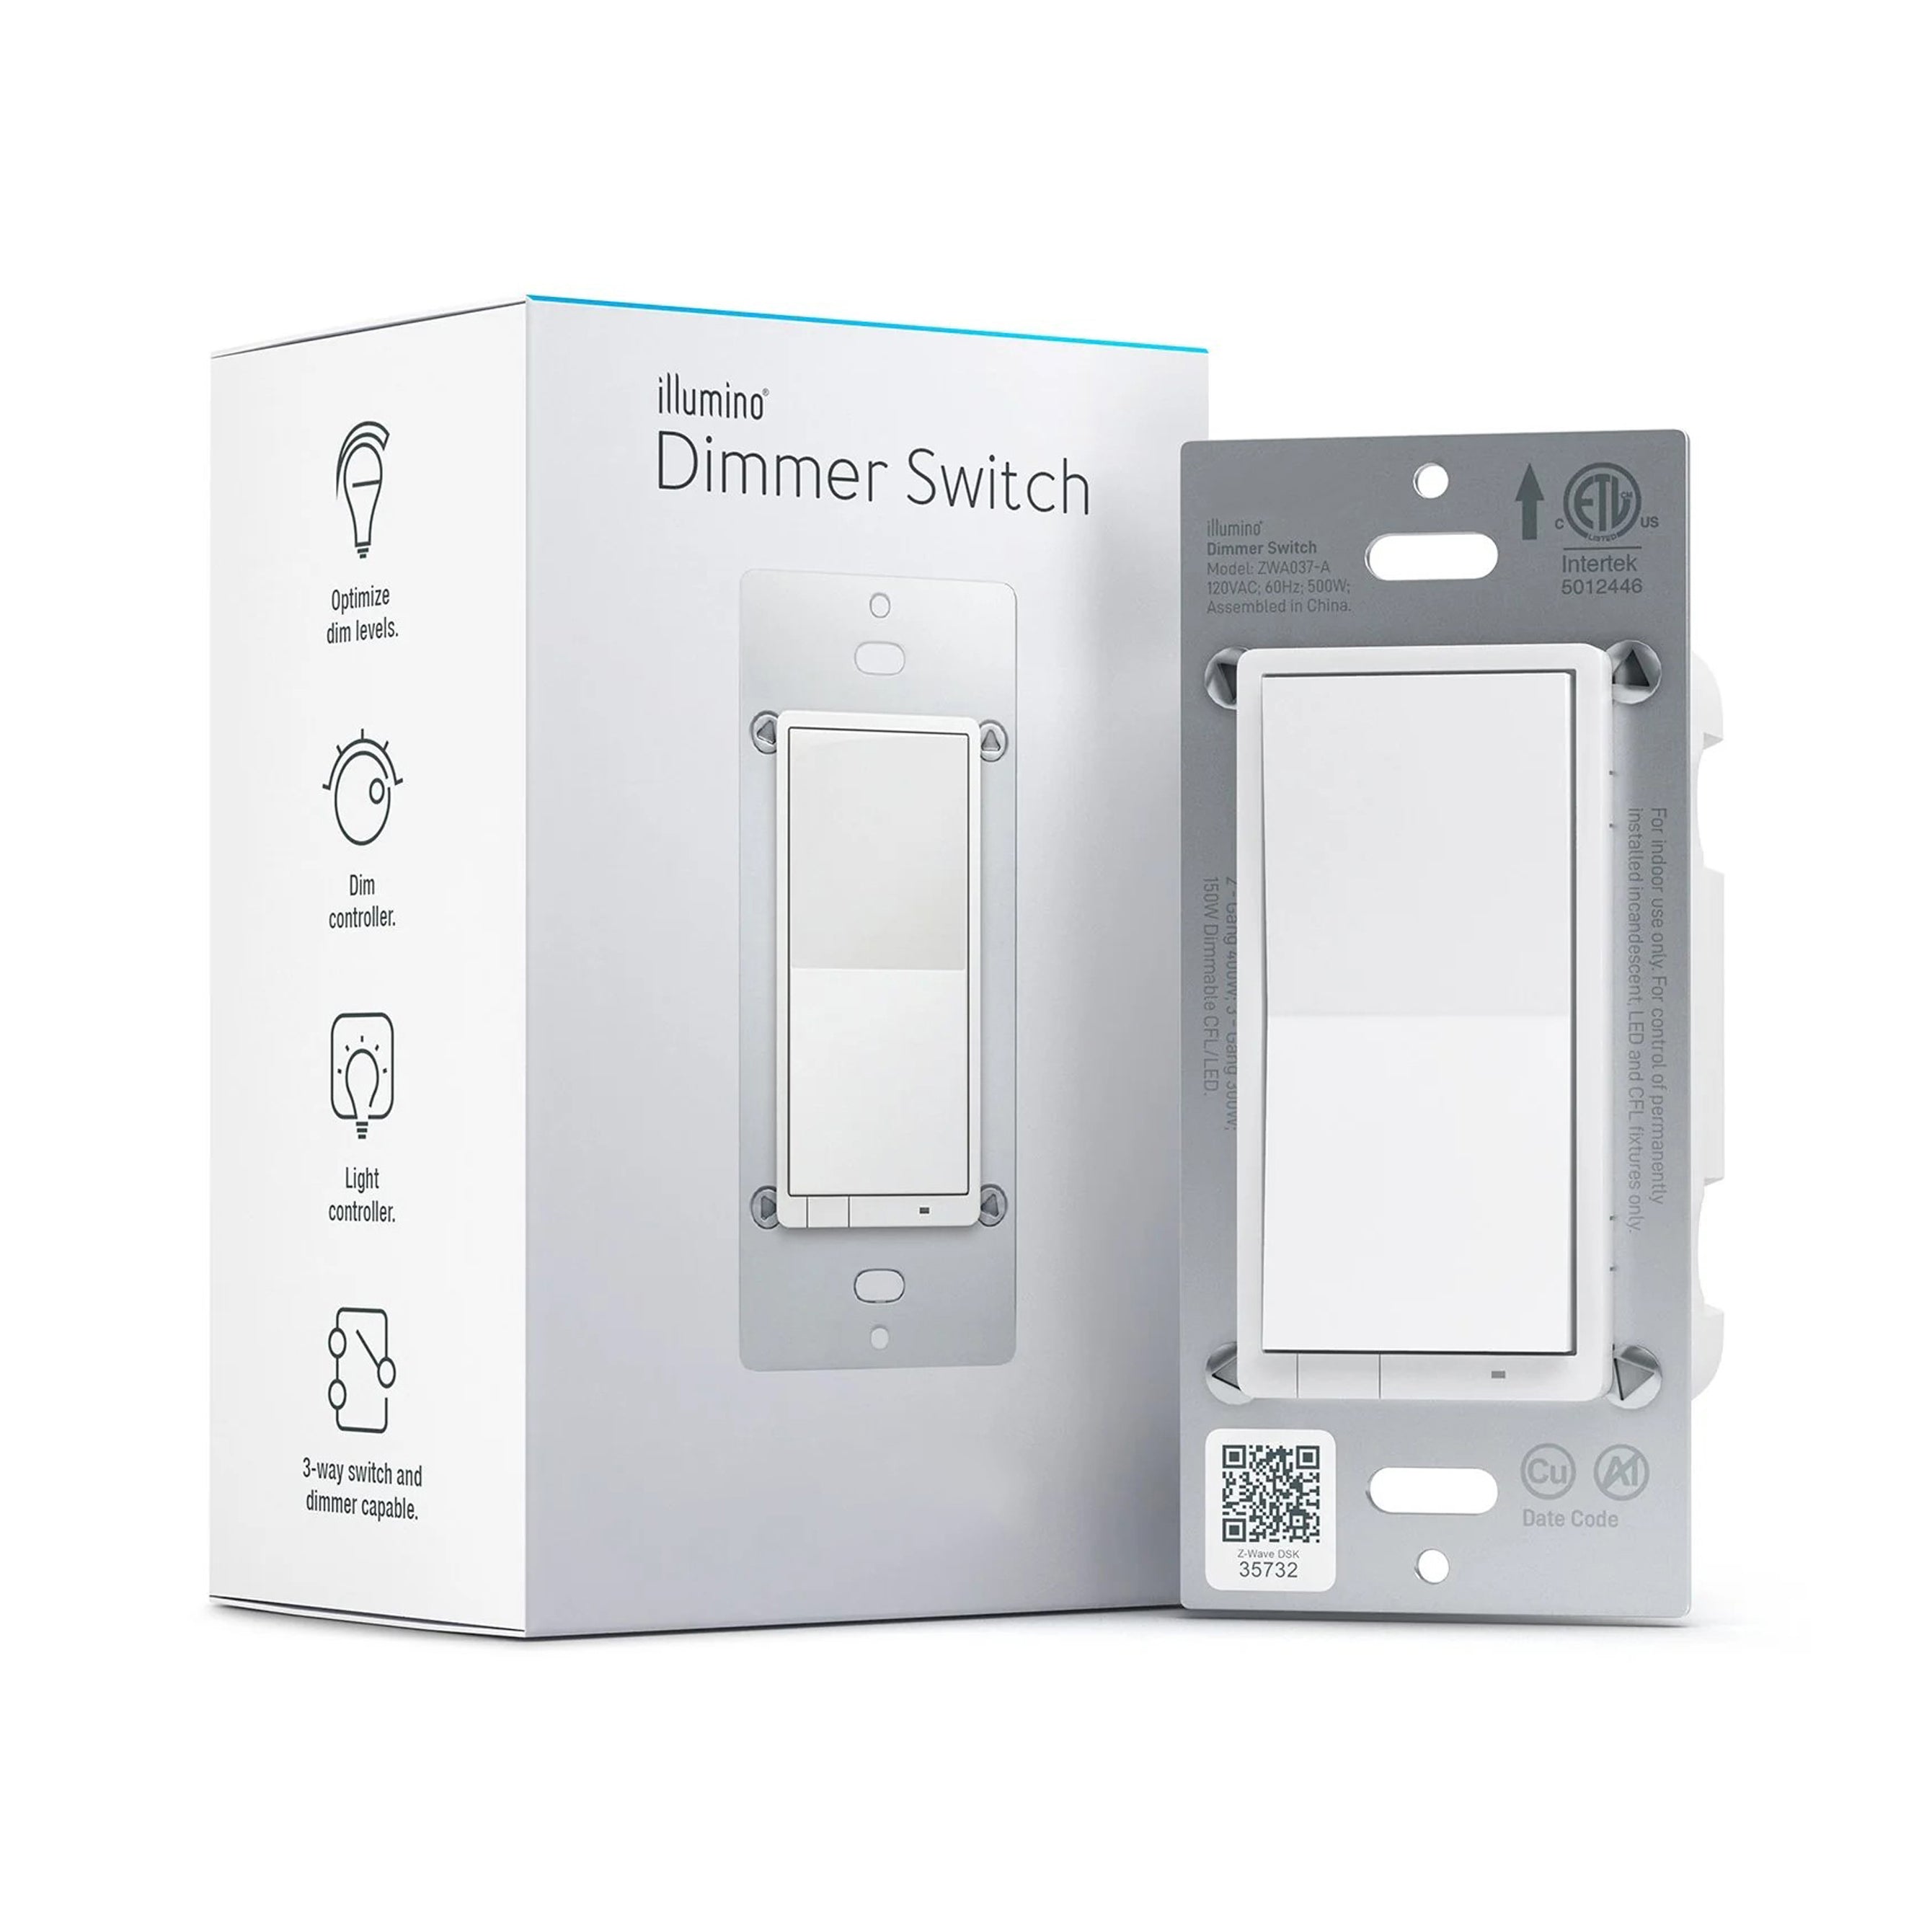 illumino Dimmer Switch